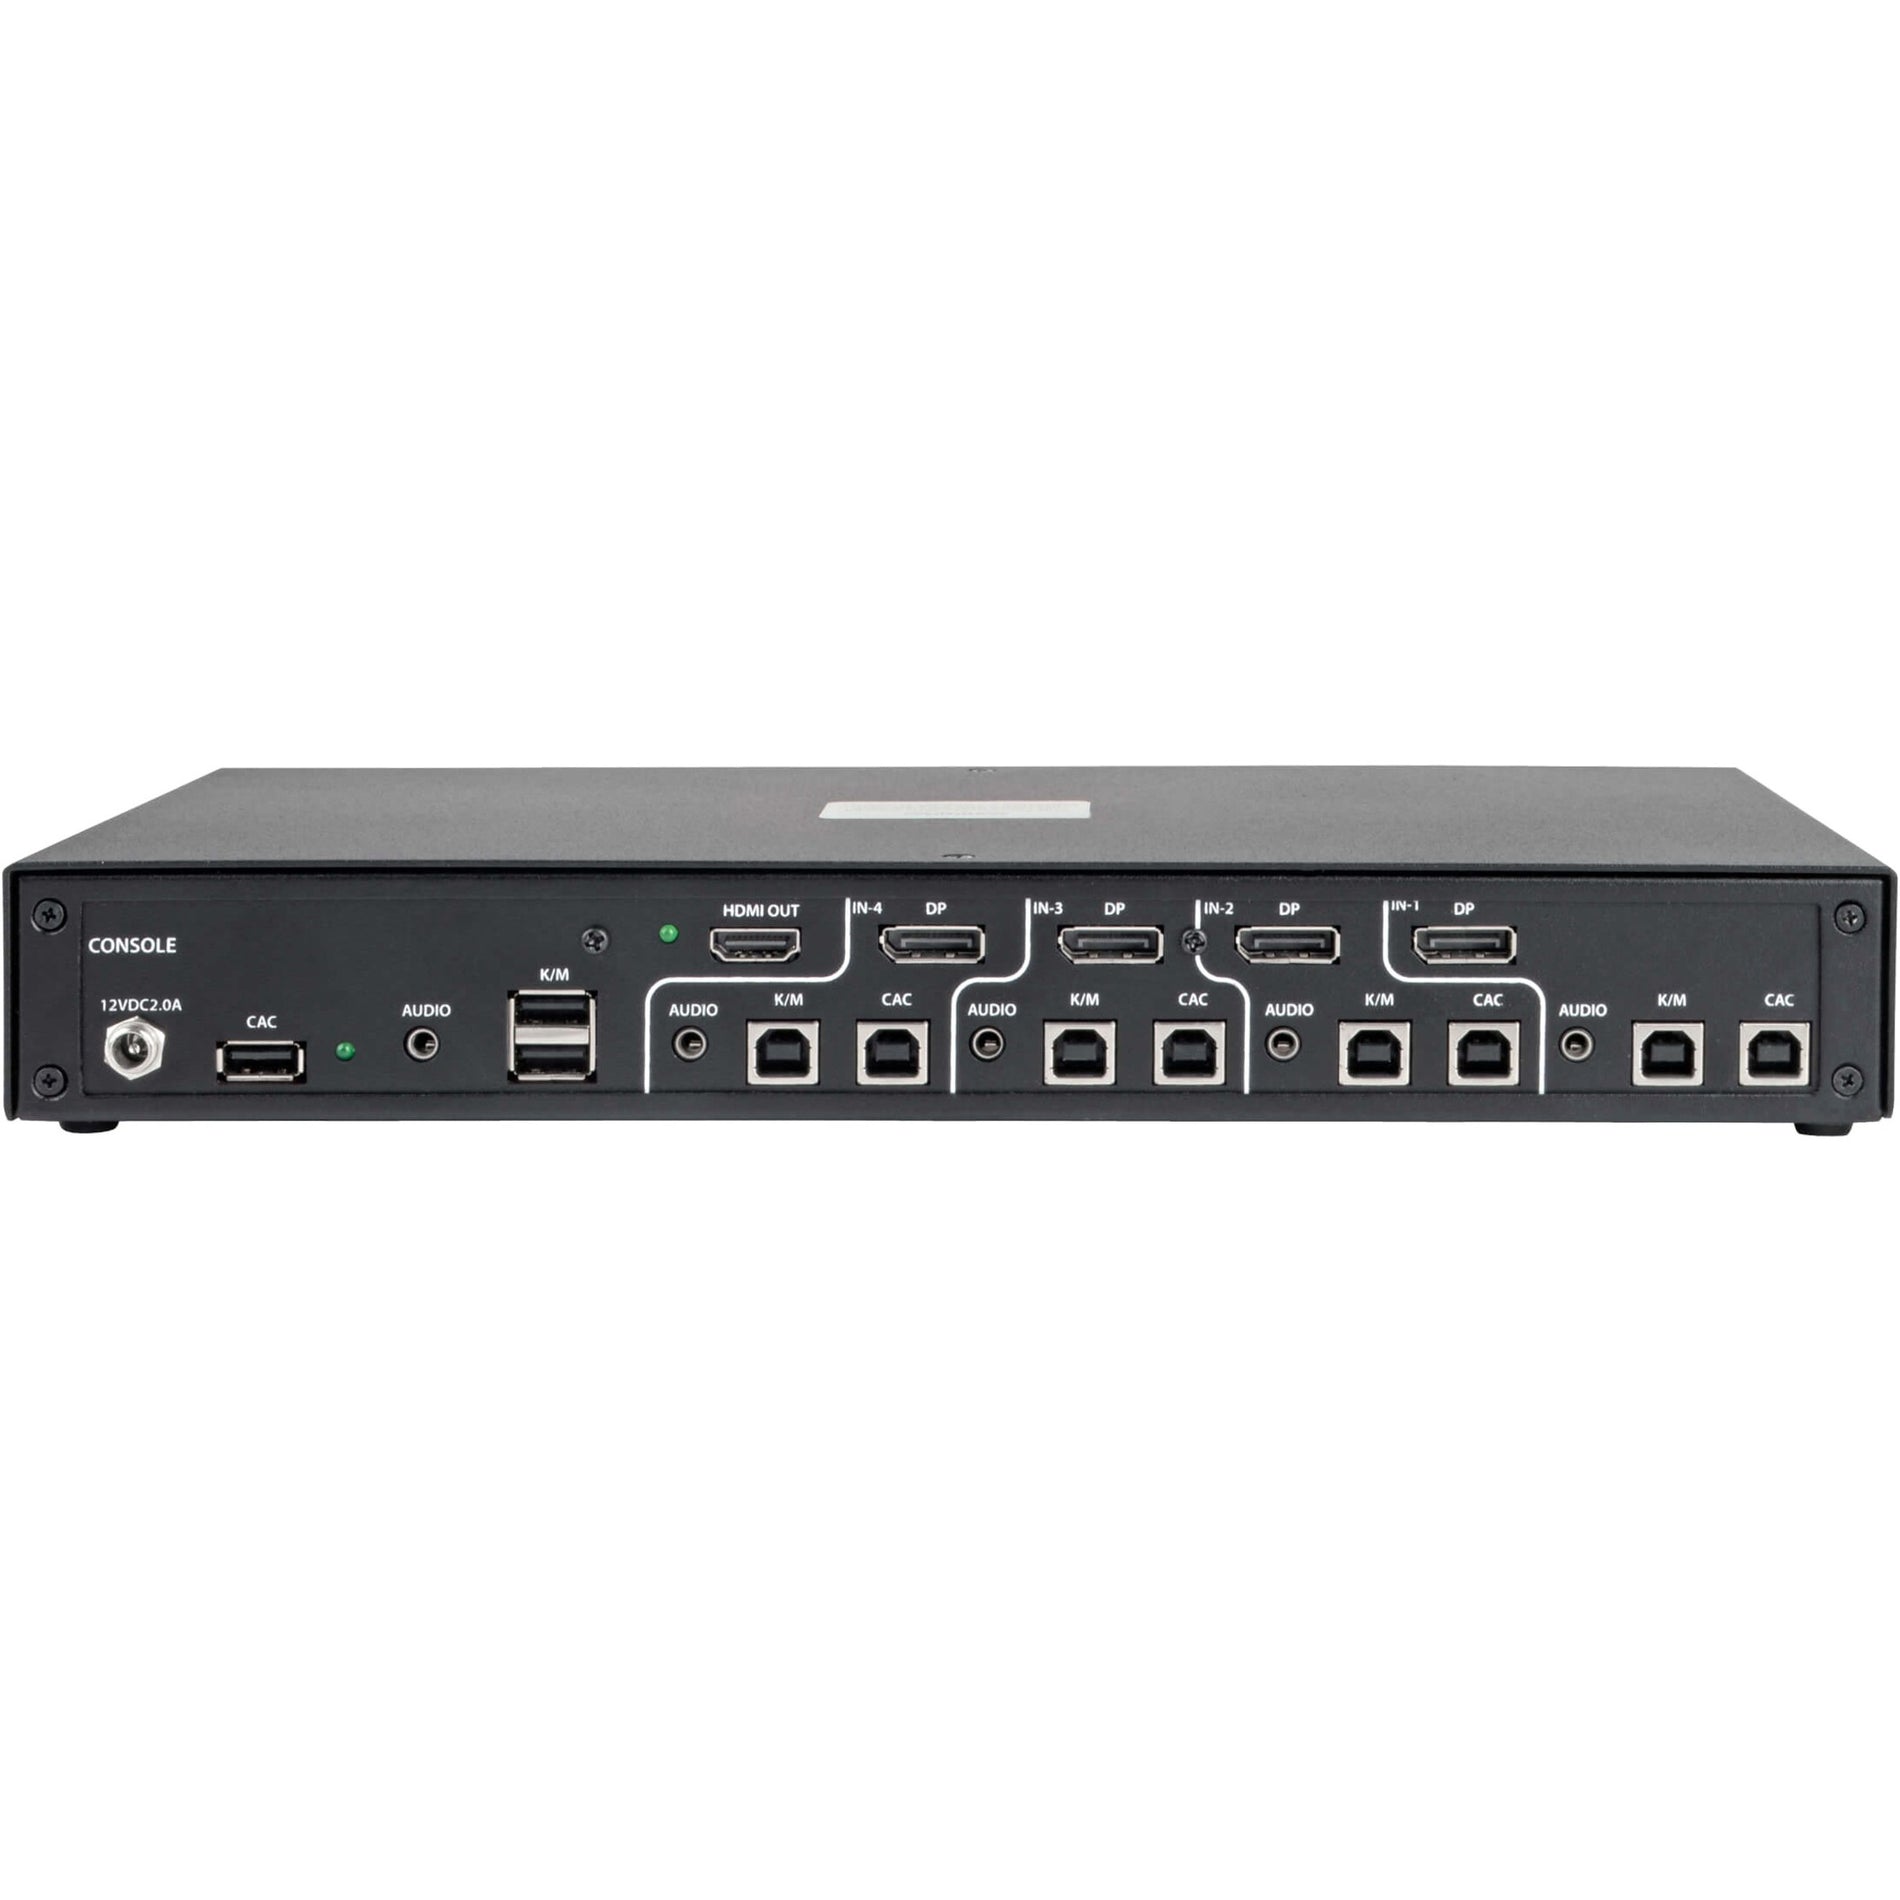 Tripp Lite B002-HD1AC4 Secure 4-Port NIAP PP3.0-Certified HDMI-to-DisplayPort KVM Switch, 3840 x 2160 Resolution, 3 Year Warranty